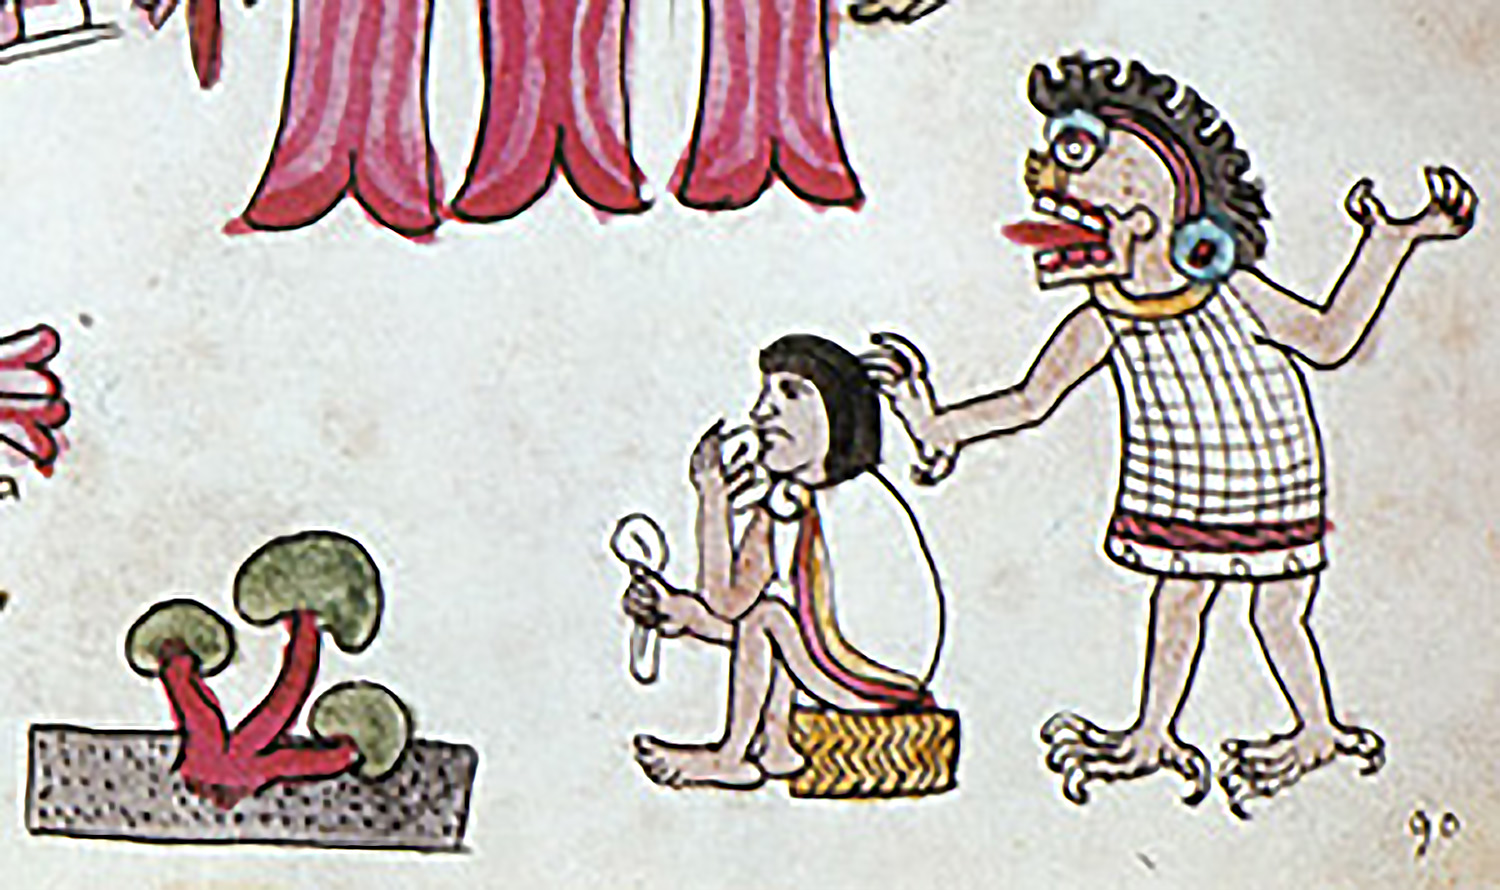 Фрагмент кодекса Мальябекки. Мексика, 16 век. Коллекция Biblioteca Nazionale Centrale di Firenze.